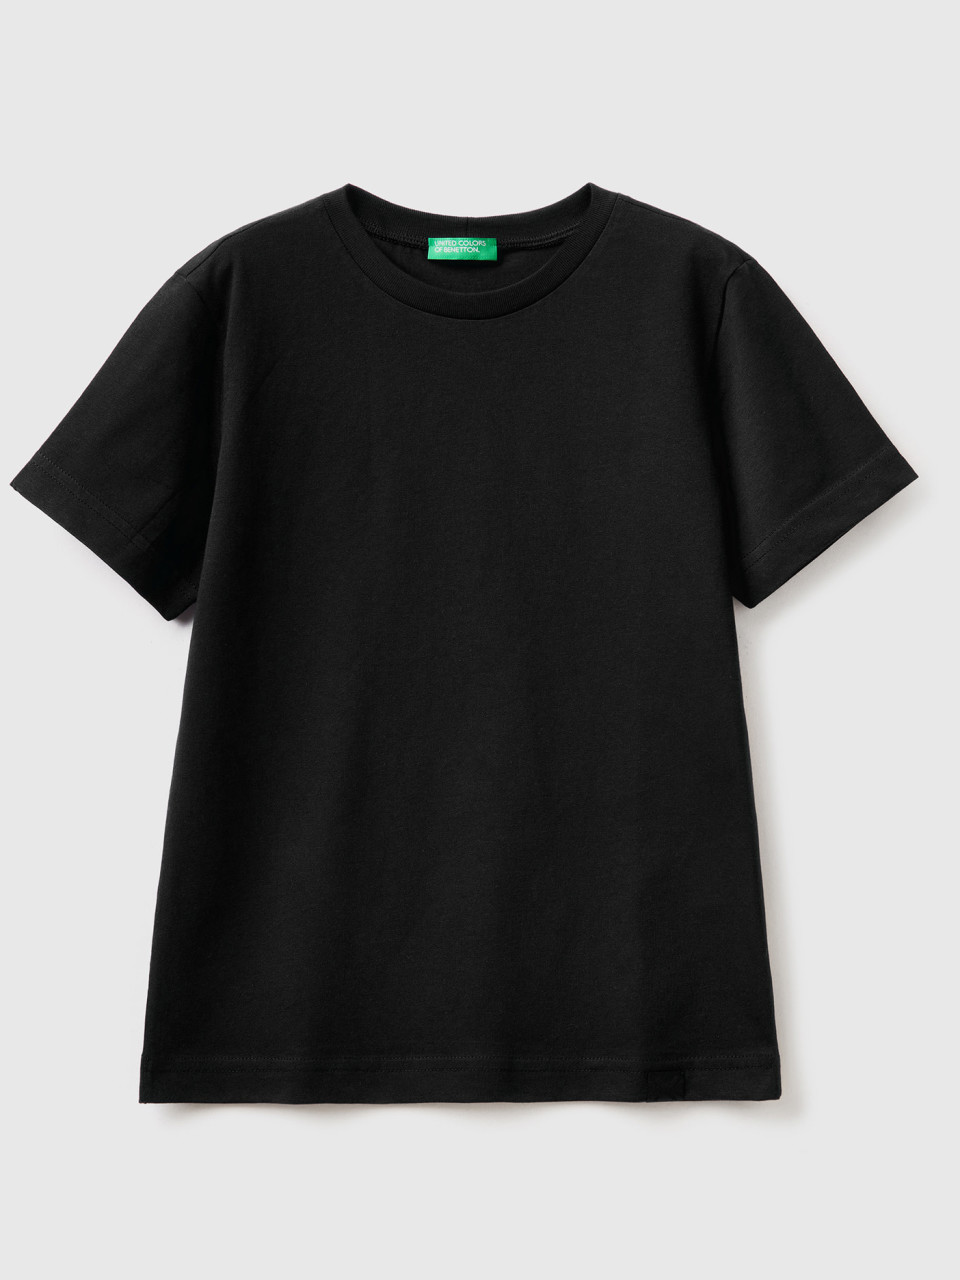 Benetton, Organic Cotton T-shirt, Black, Kids